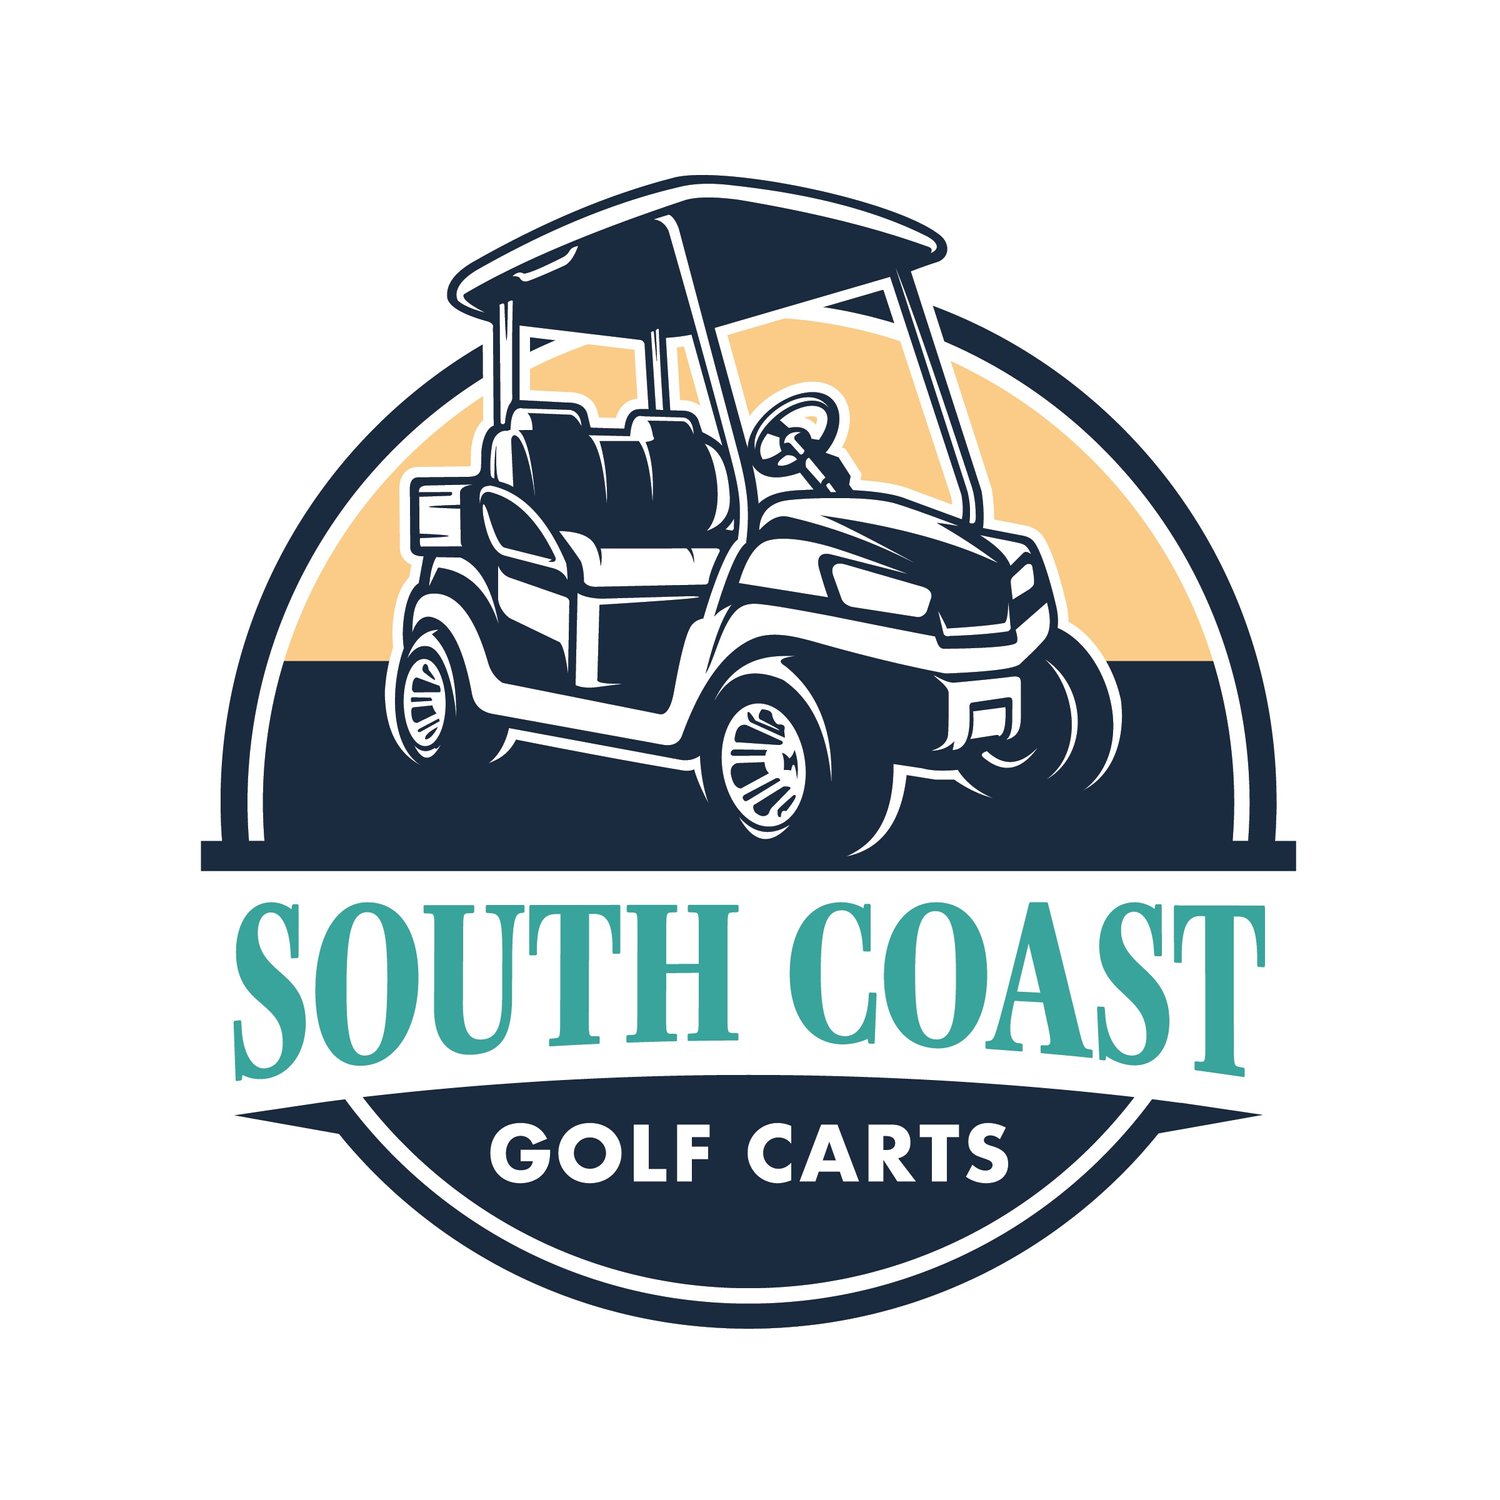 South Coast Golf Carts